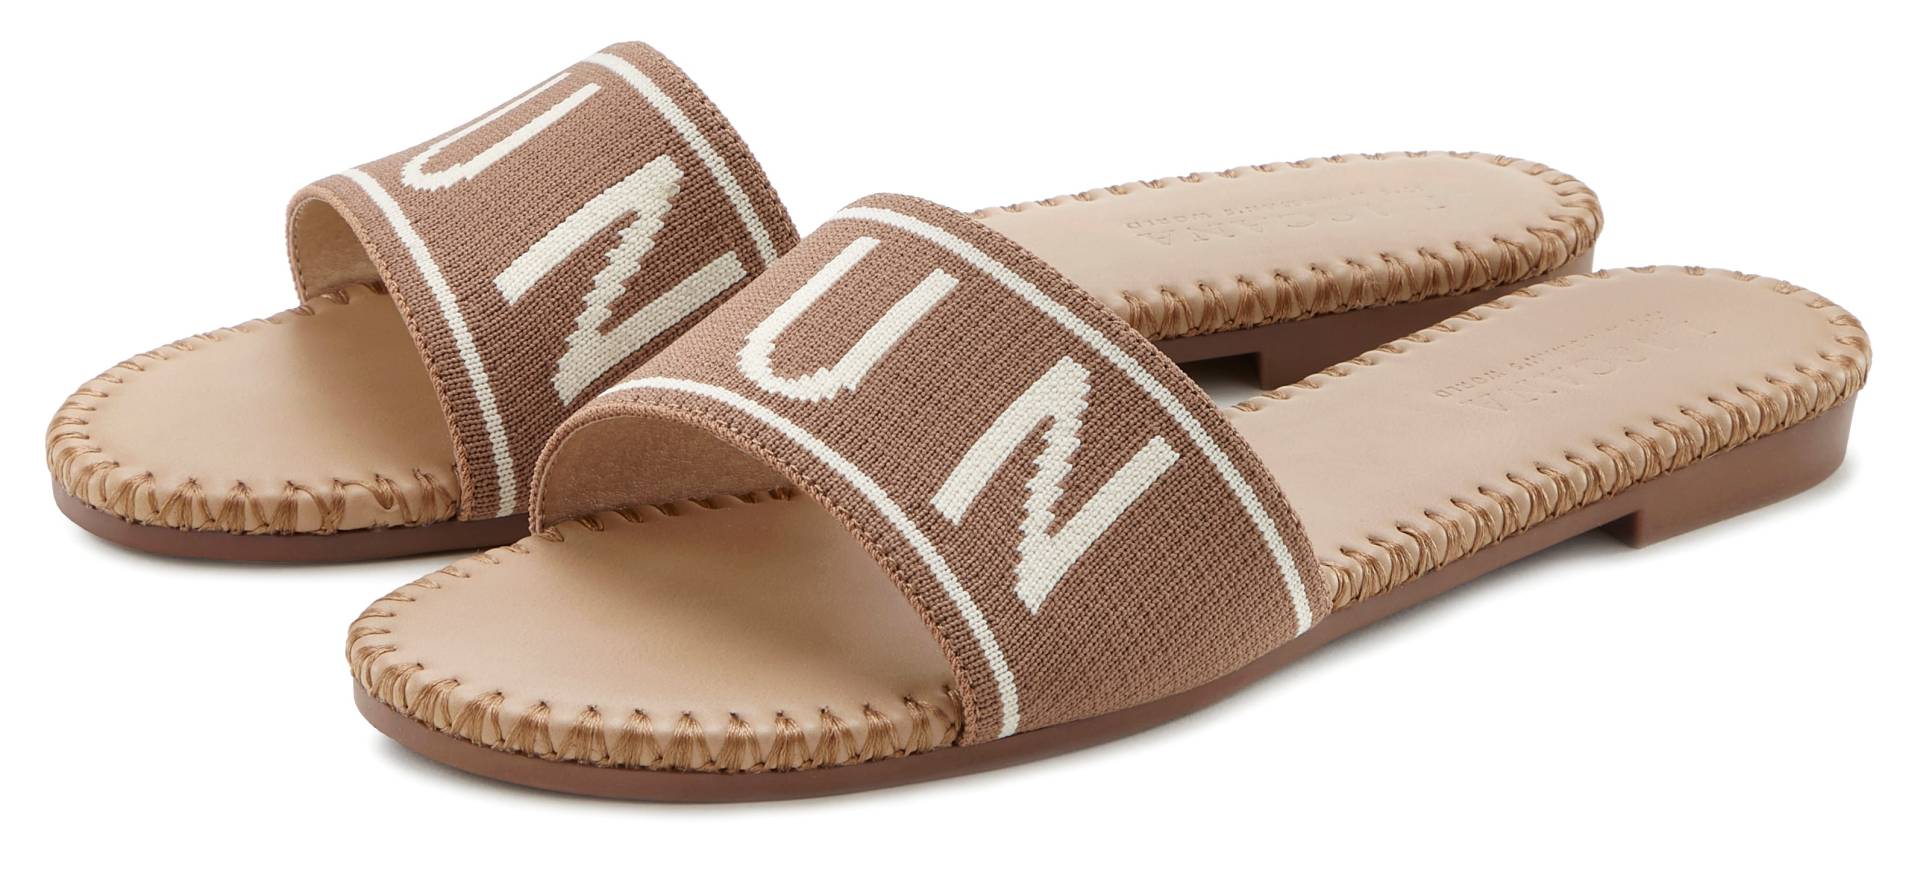 LASCANA Pantolette, Mule, Sandale, offener Schuh aus Textil mit modischem Schriftzug VEGAN von LASCANA